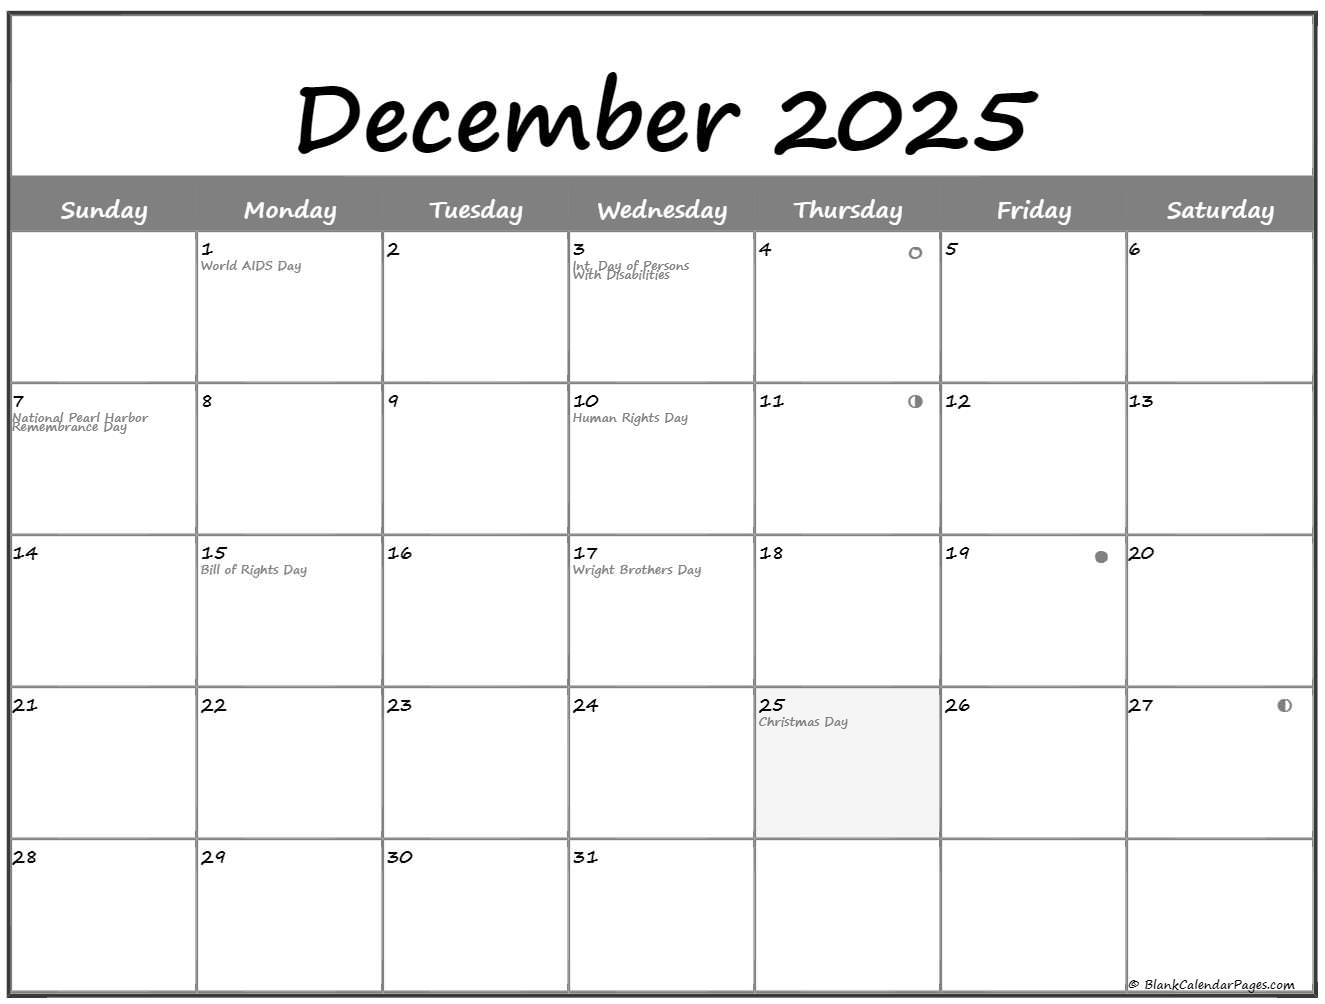 december-2025-lunar-calendar-moon-phase-calendar